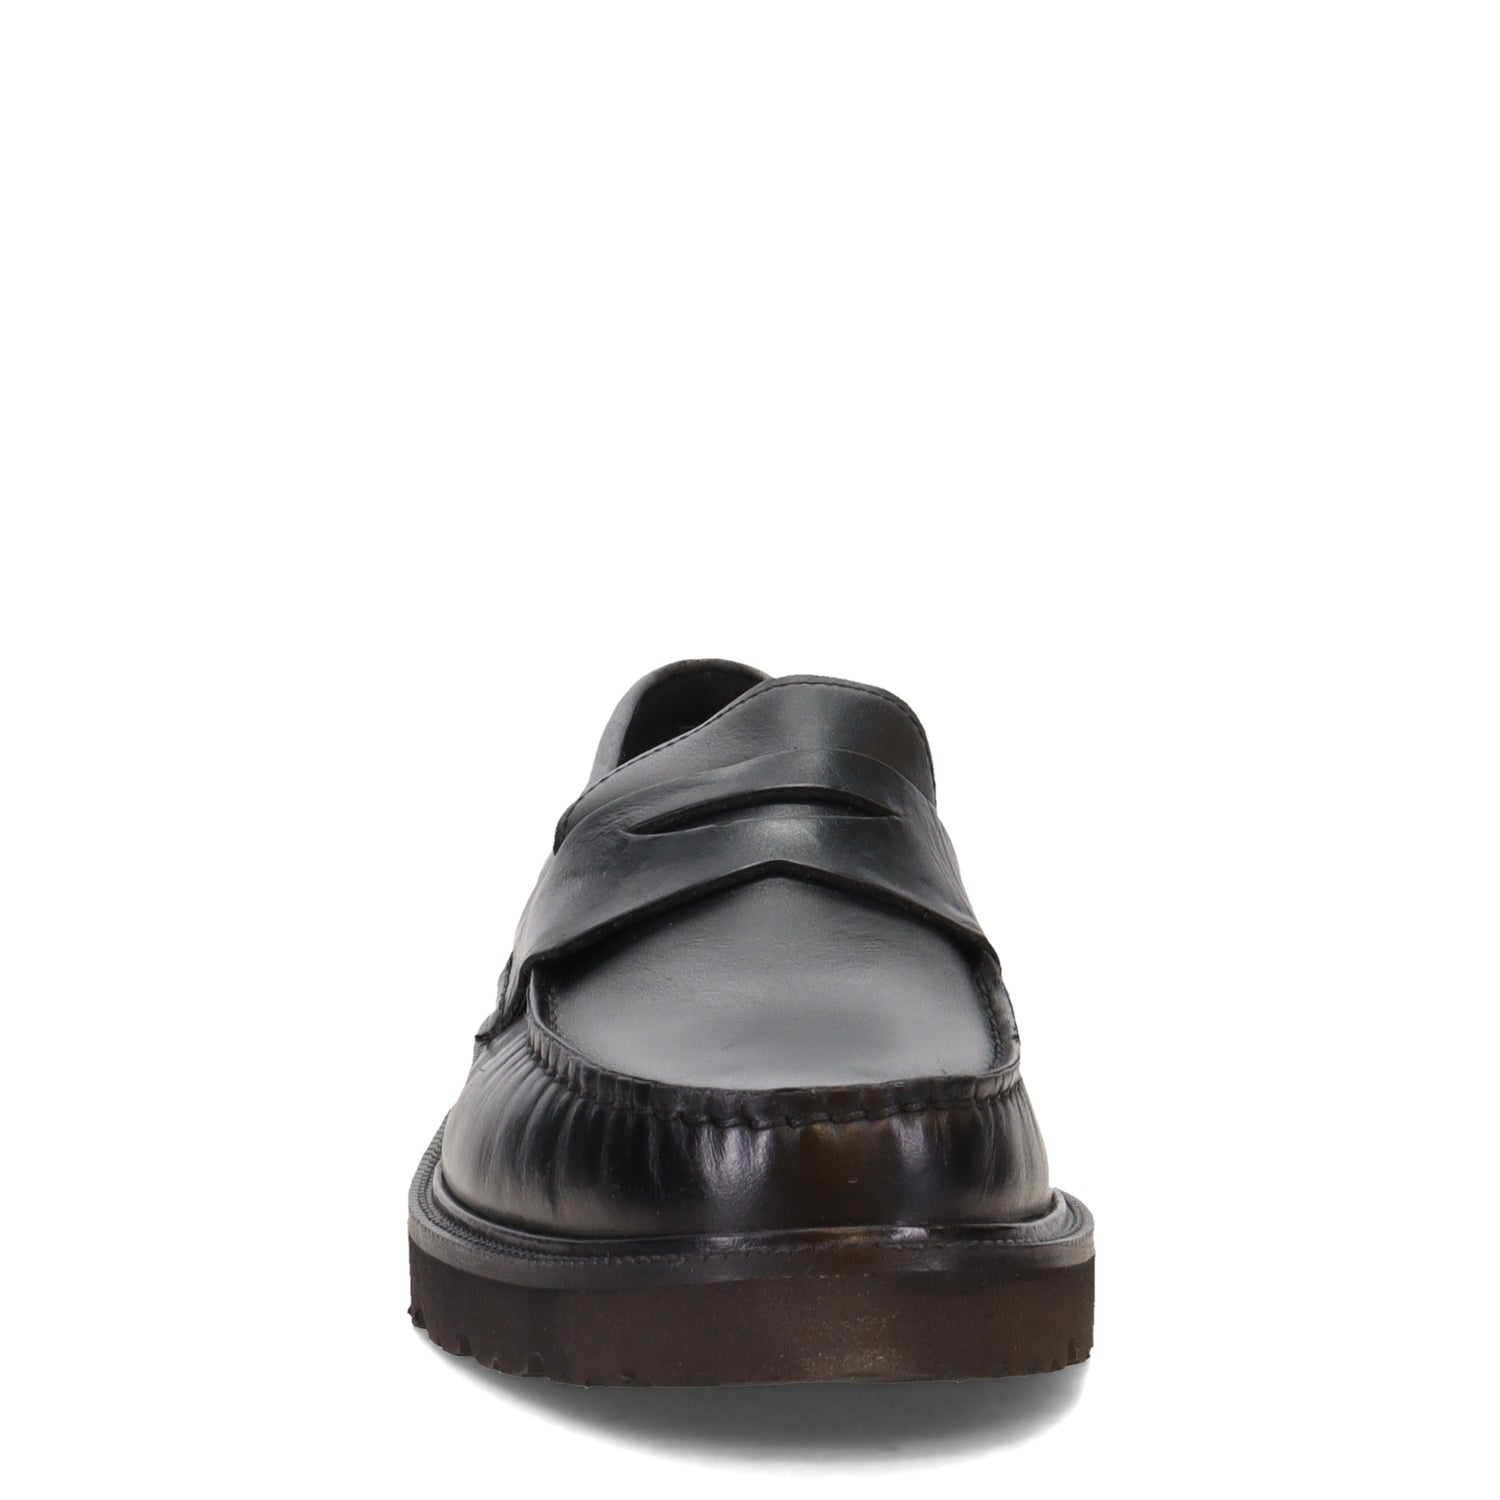 Peltz Shoes  Men's Cole Haan American Classics Penny Loafer BLACK C36028